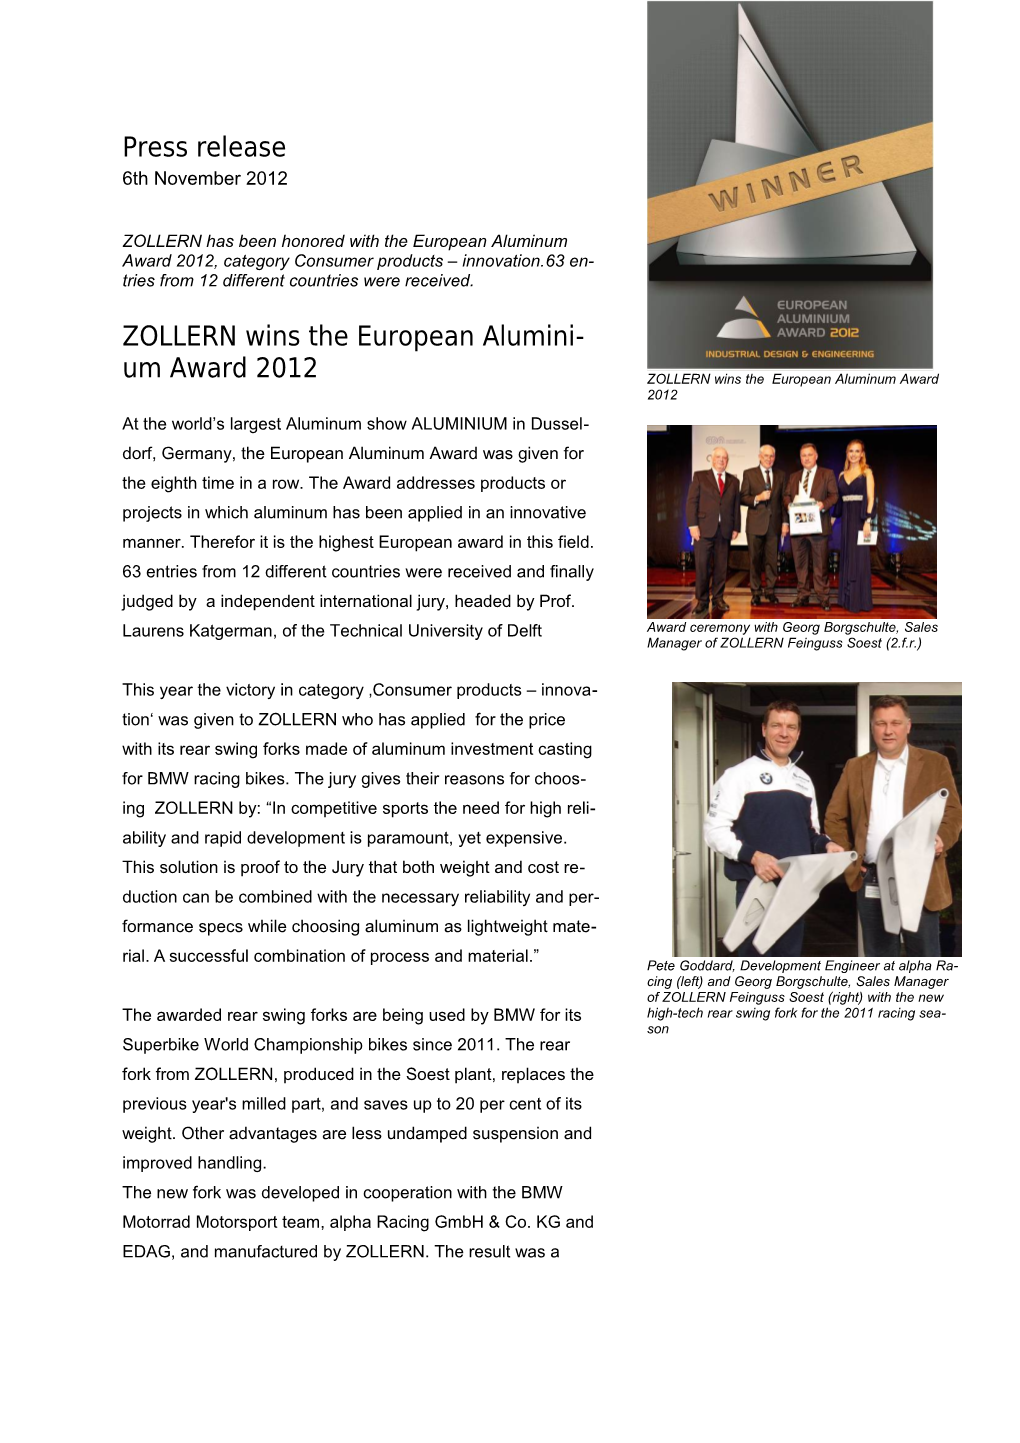 ZOLLERN Wins the European Aluminium Award 2012